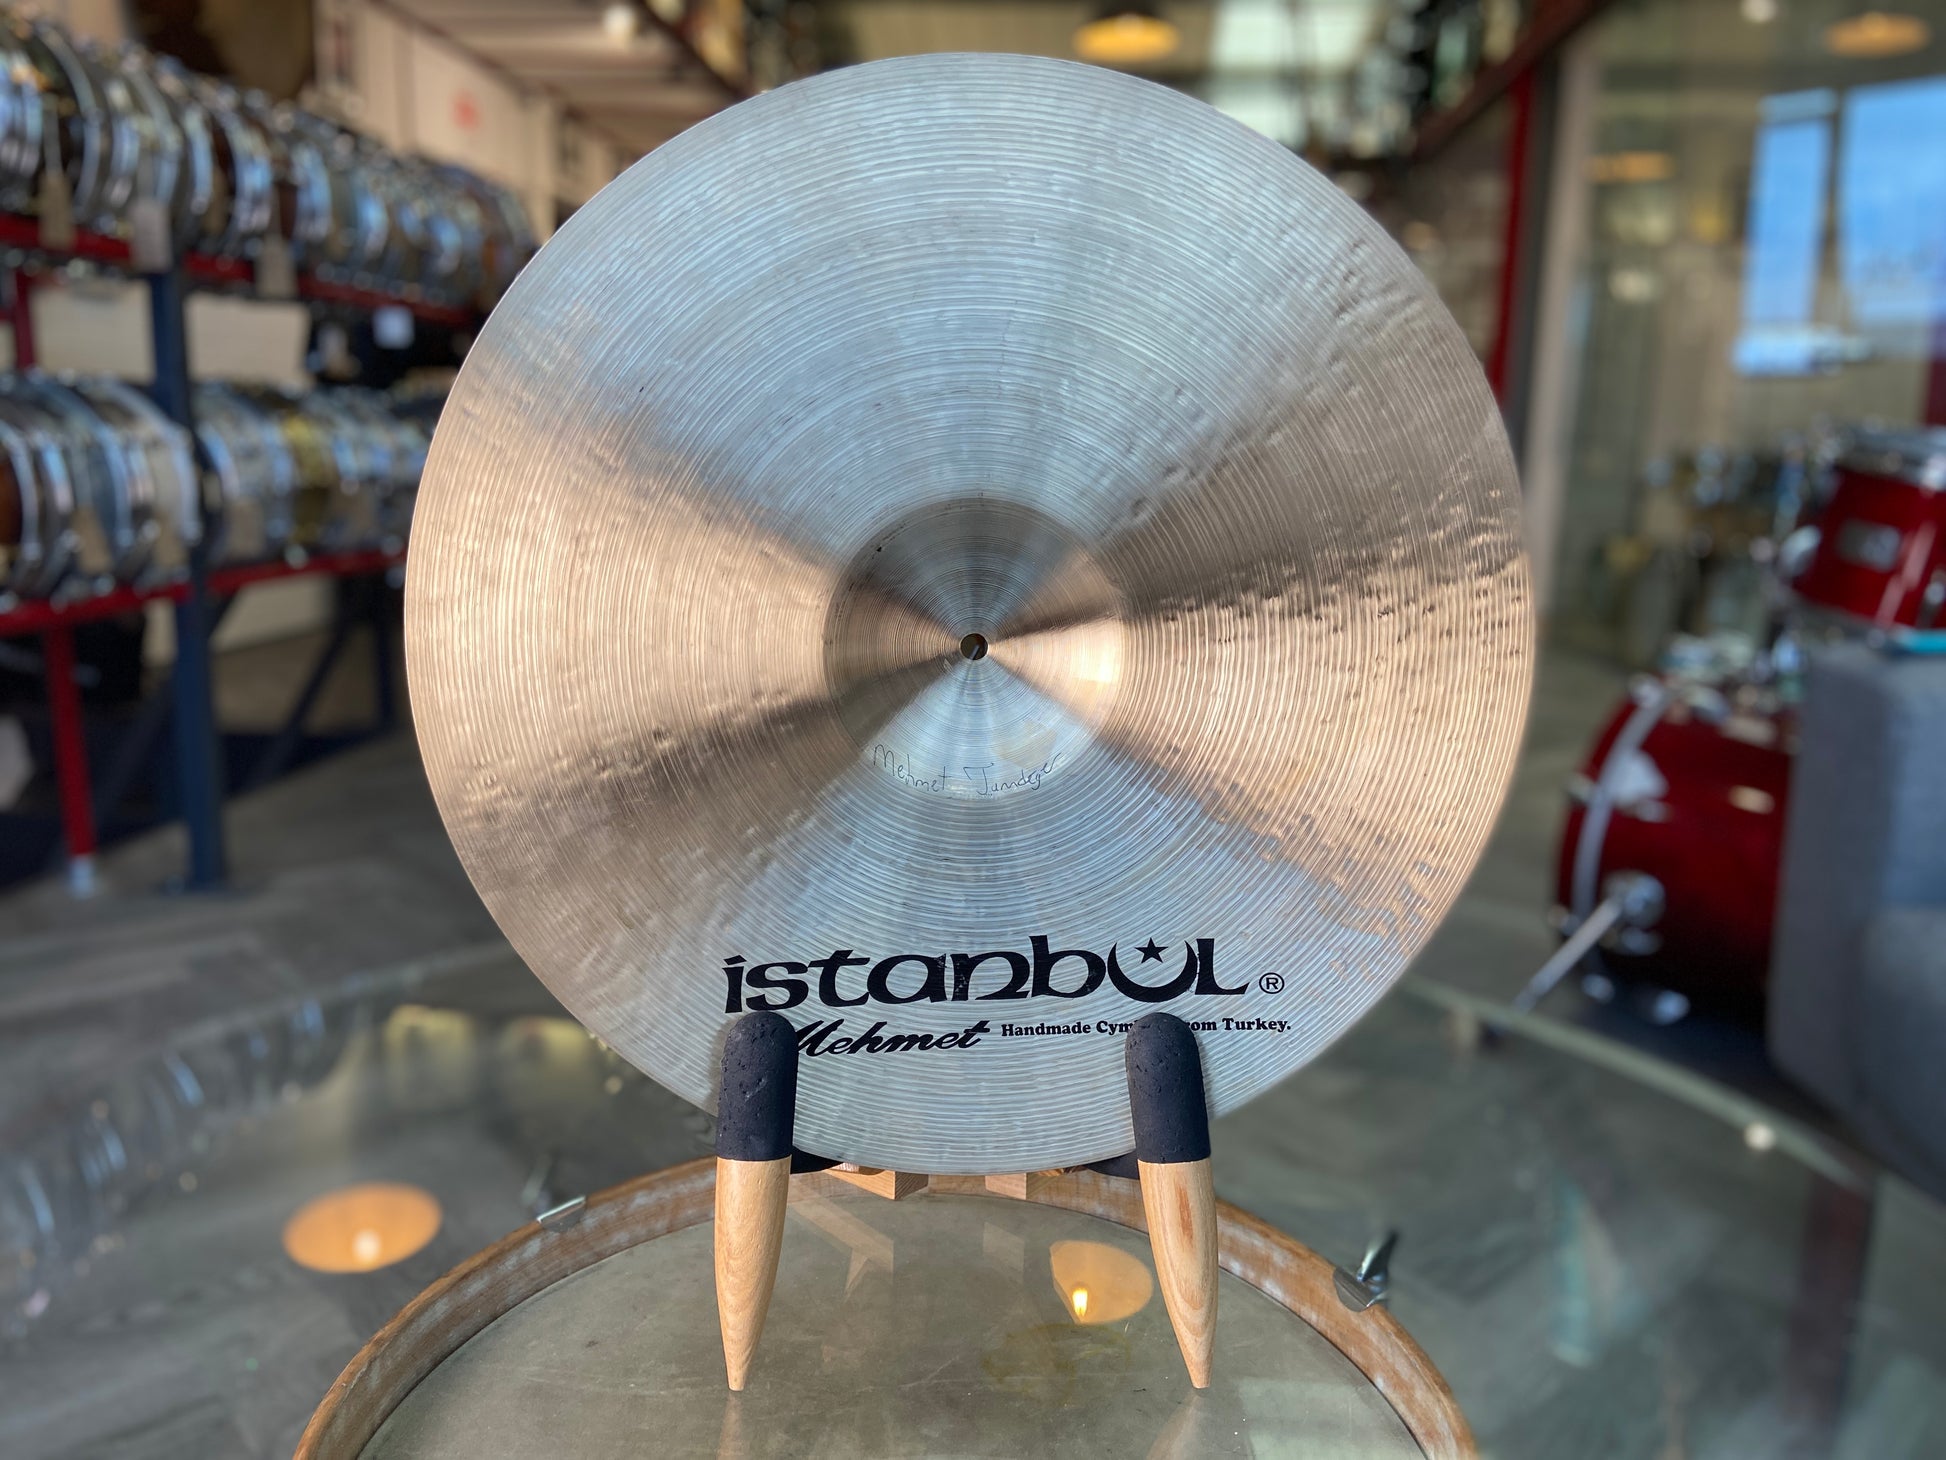 Istanbul Mehmet Traditional 19" Custom Dry Ride Cymbal